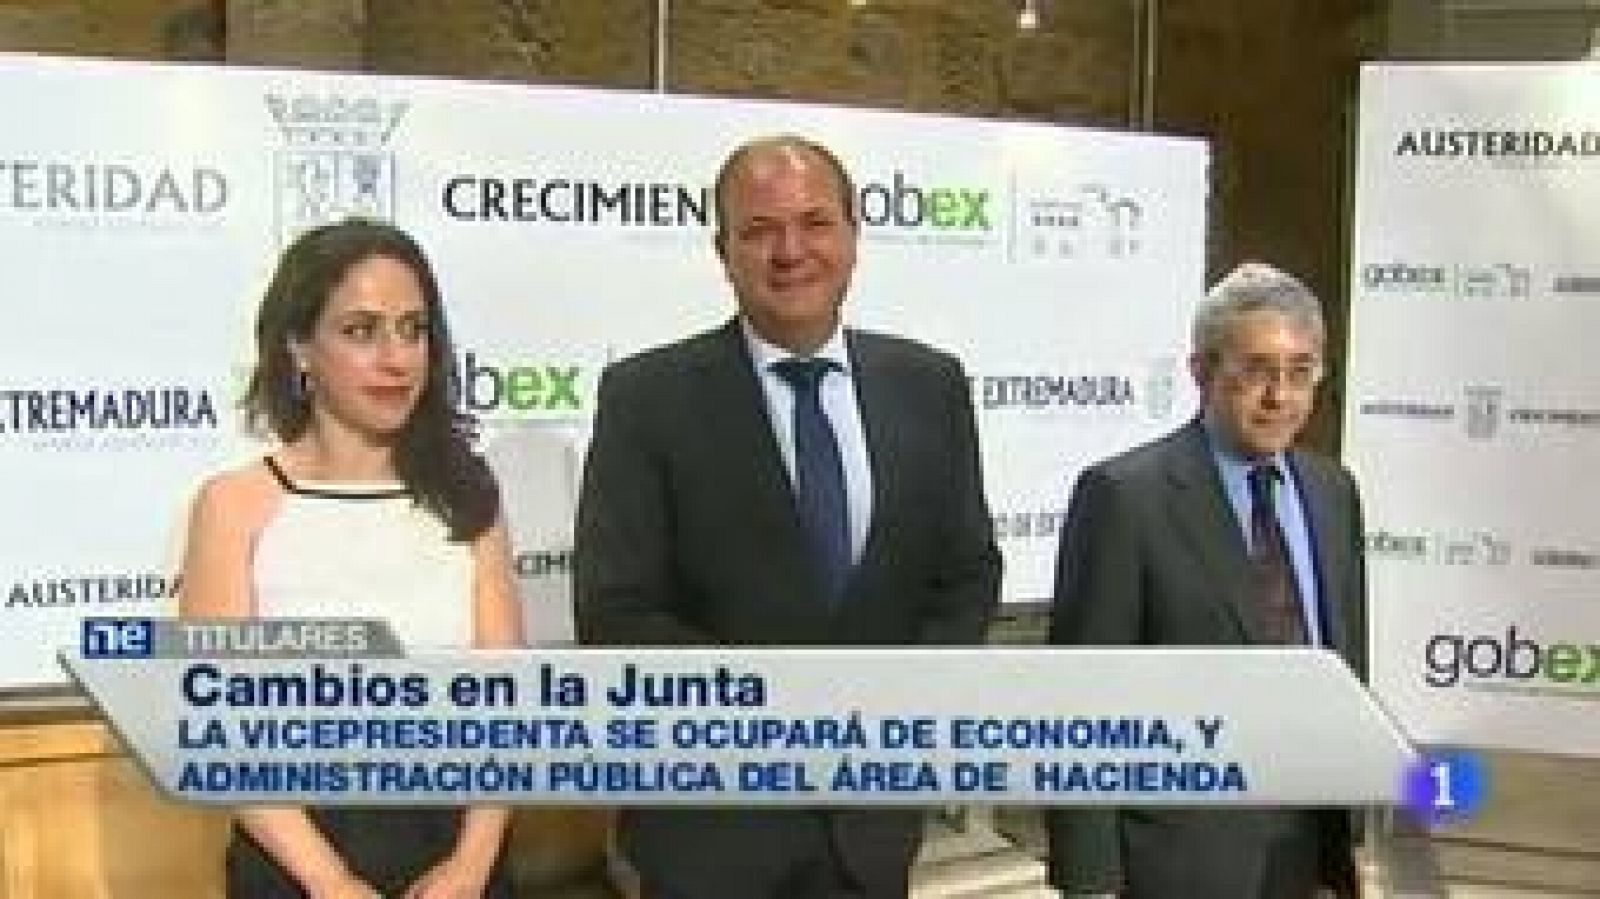 Noticias de Extremadura: Noticias de Extremadura - 18/06/14 | RTVE Play